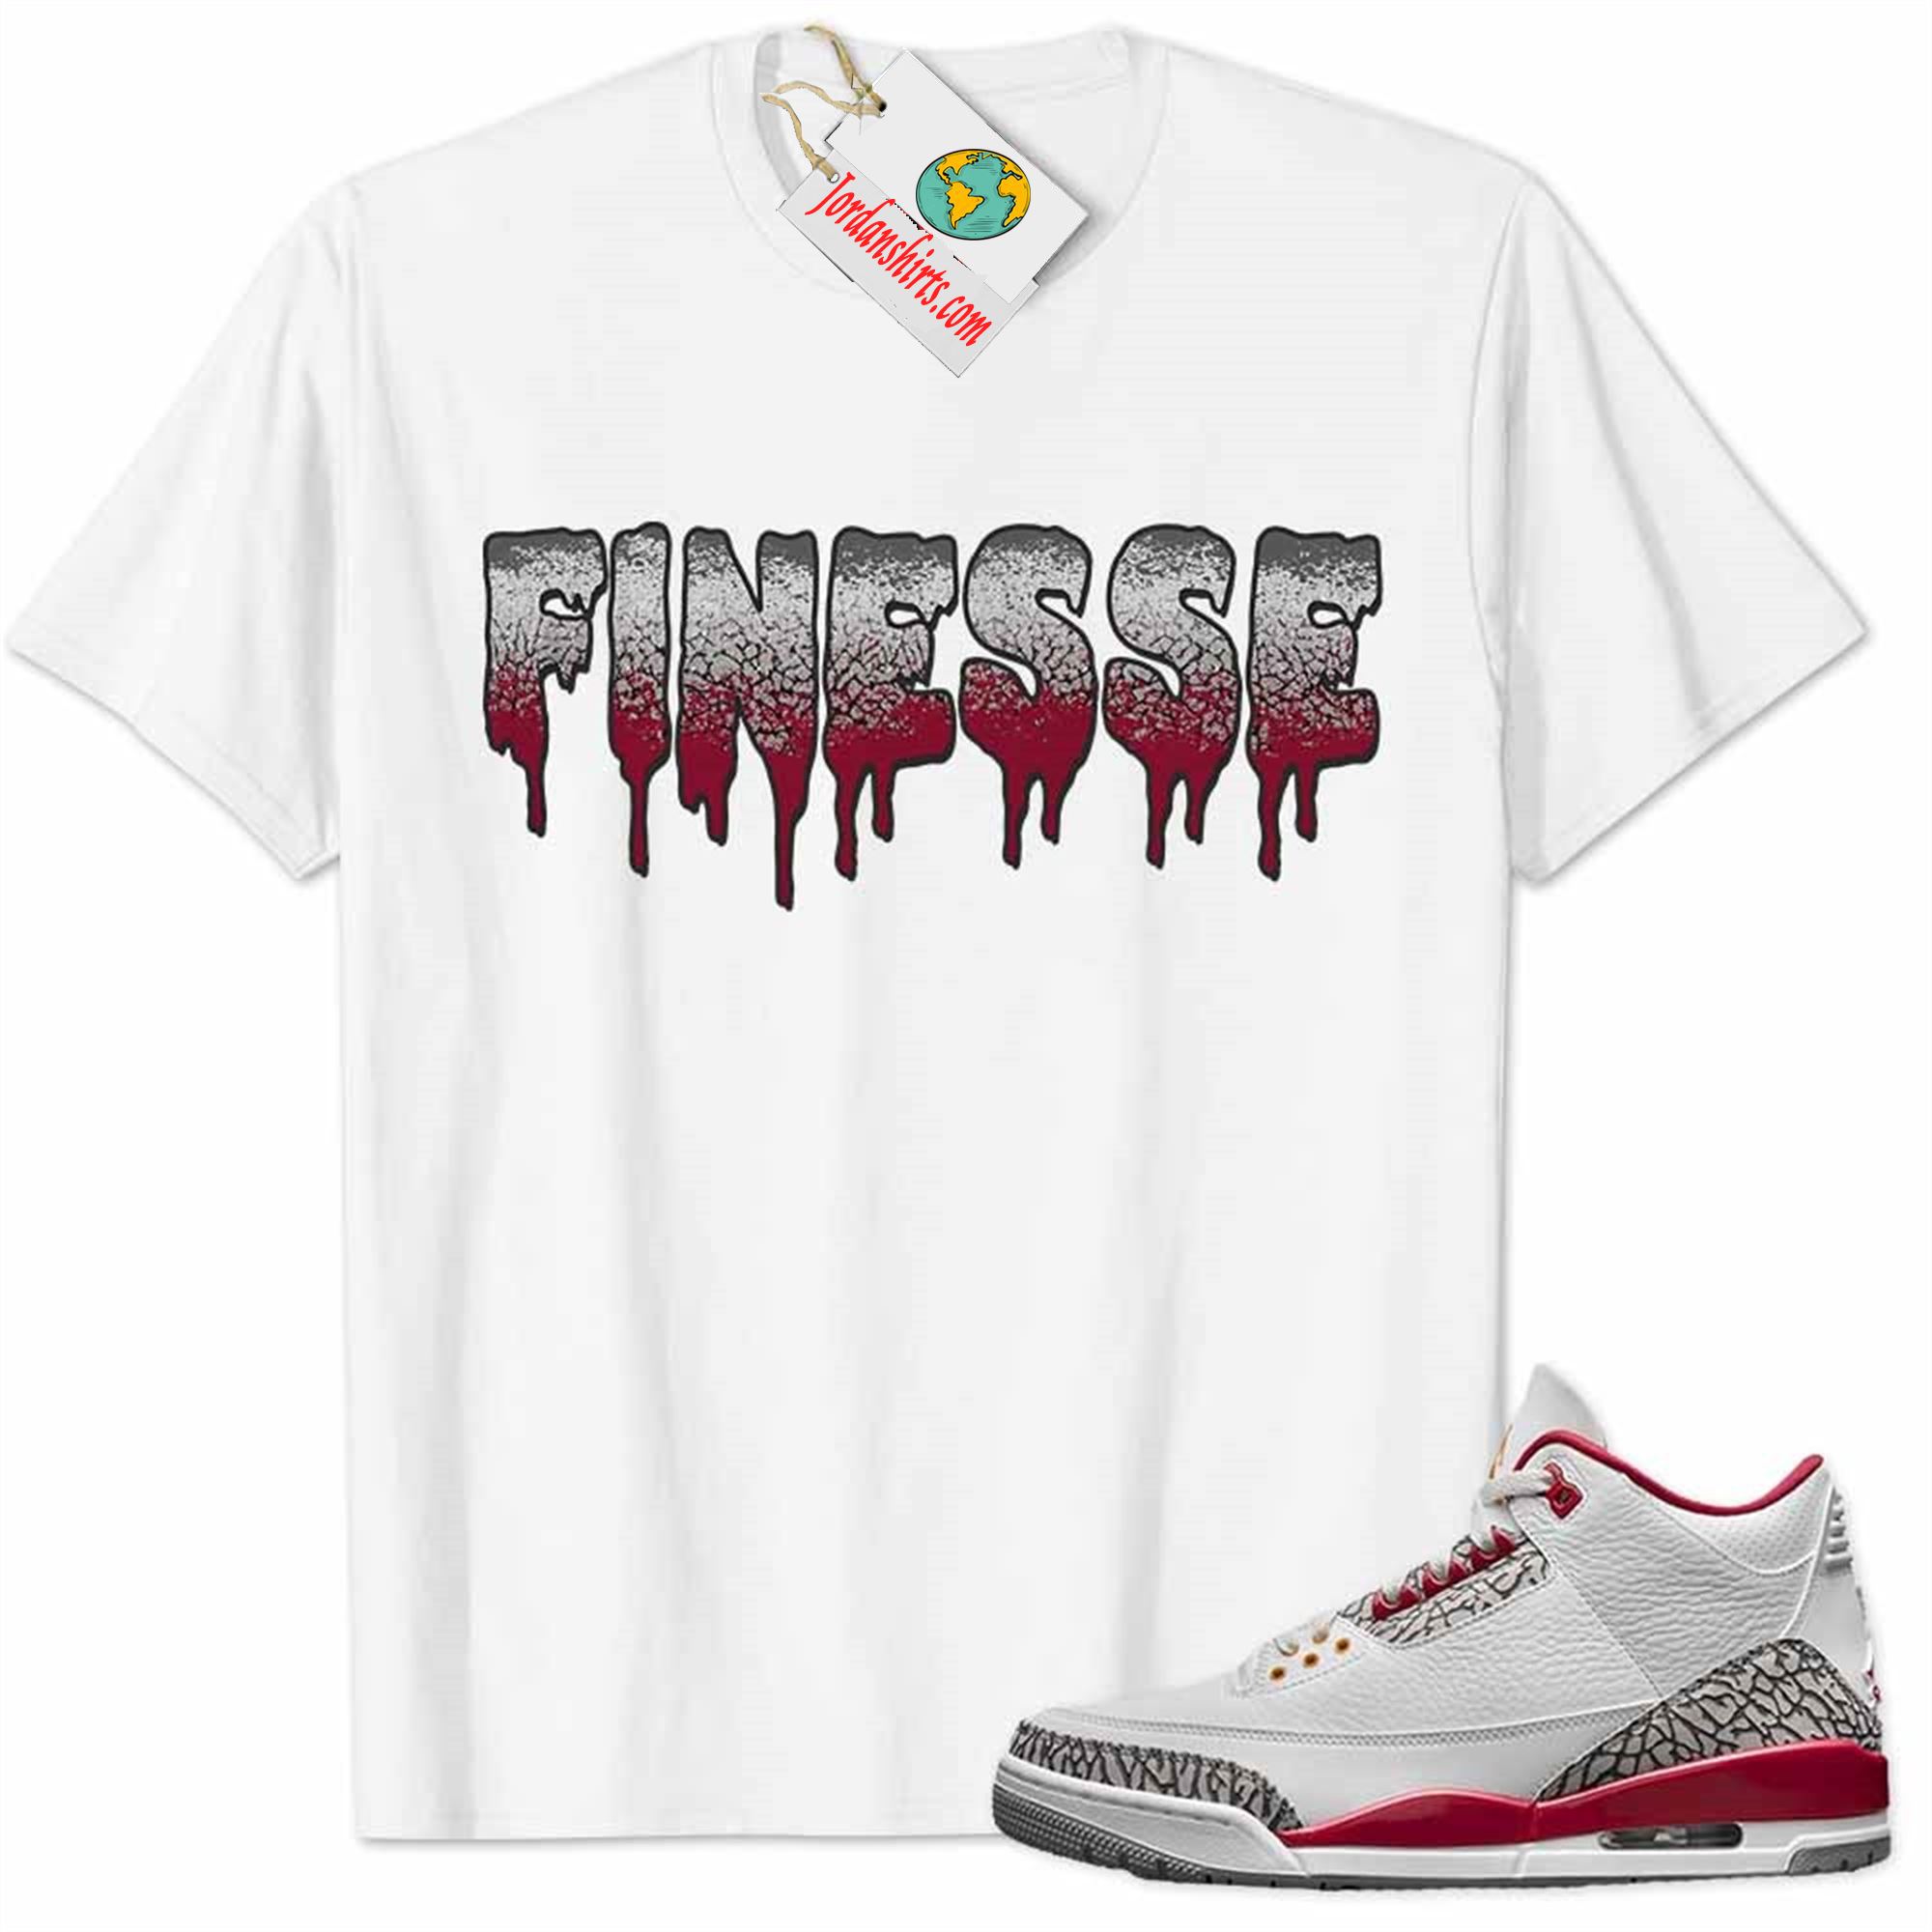 Jordan 3 Shirt, Jordan 3 Cardinal Red Shirt Finesse Drip White Size Up To 5xl